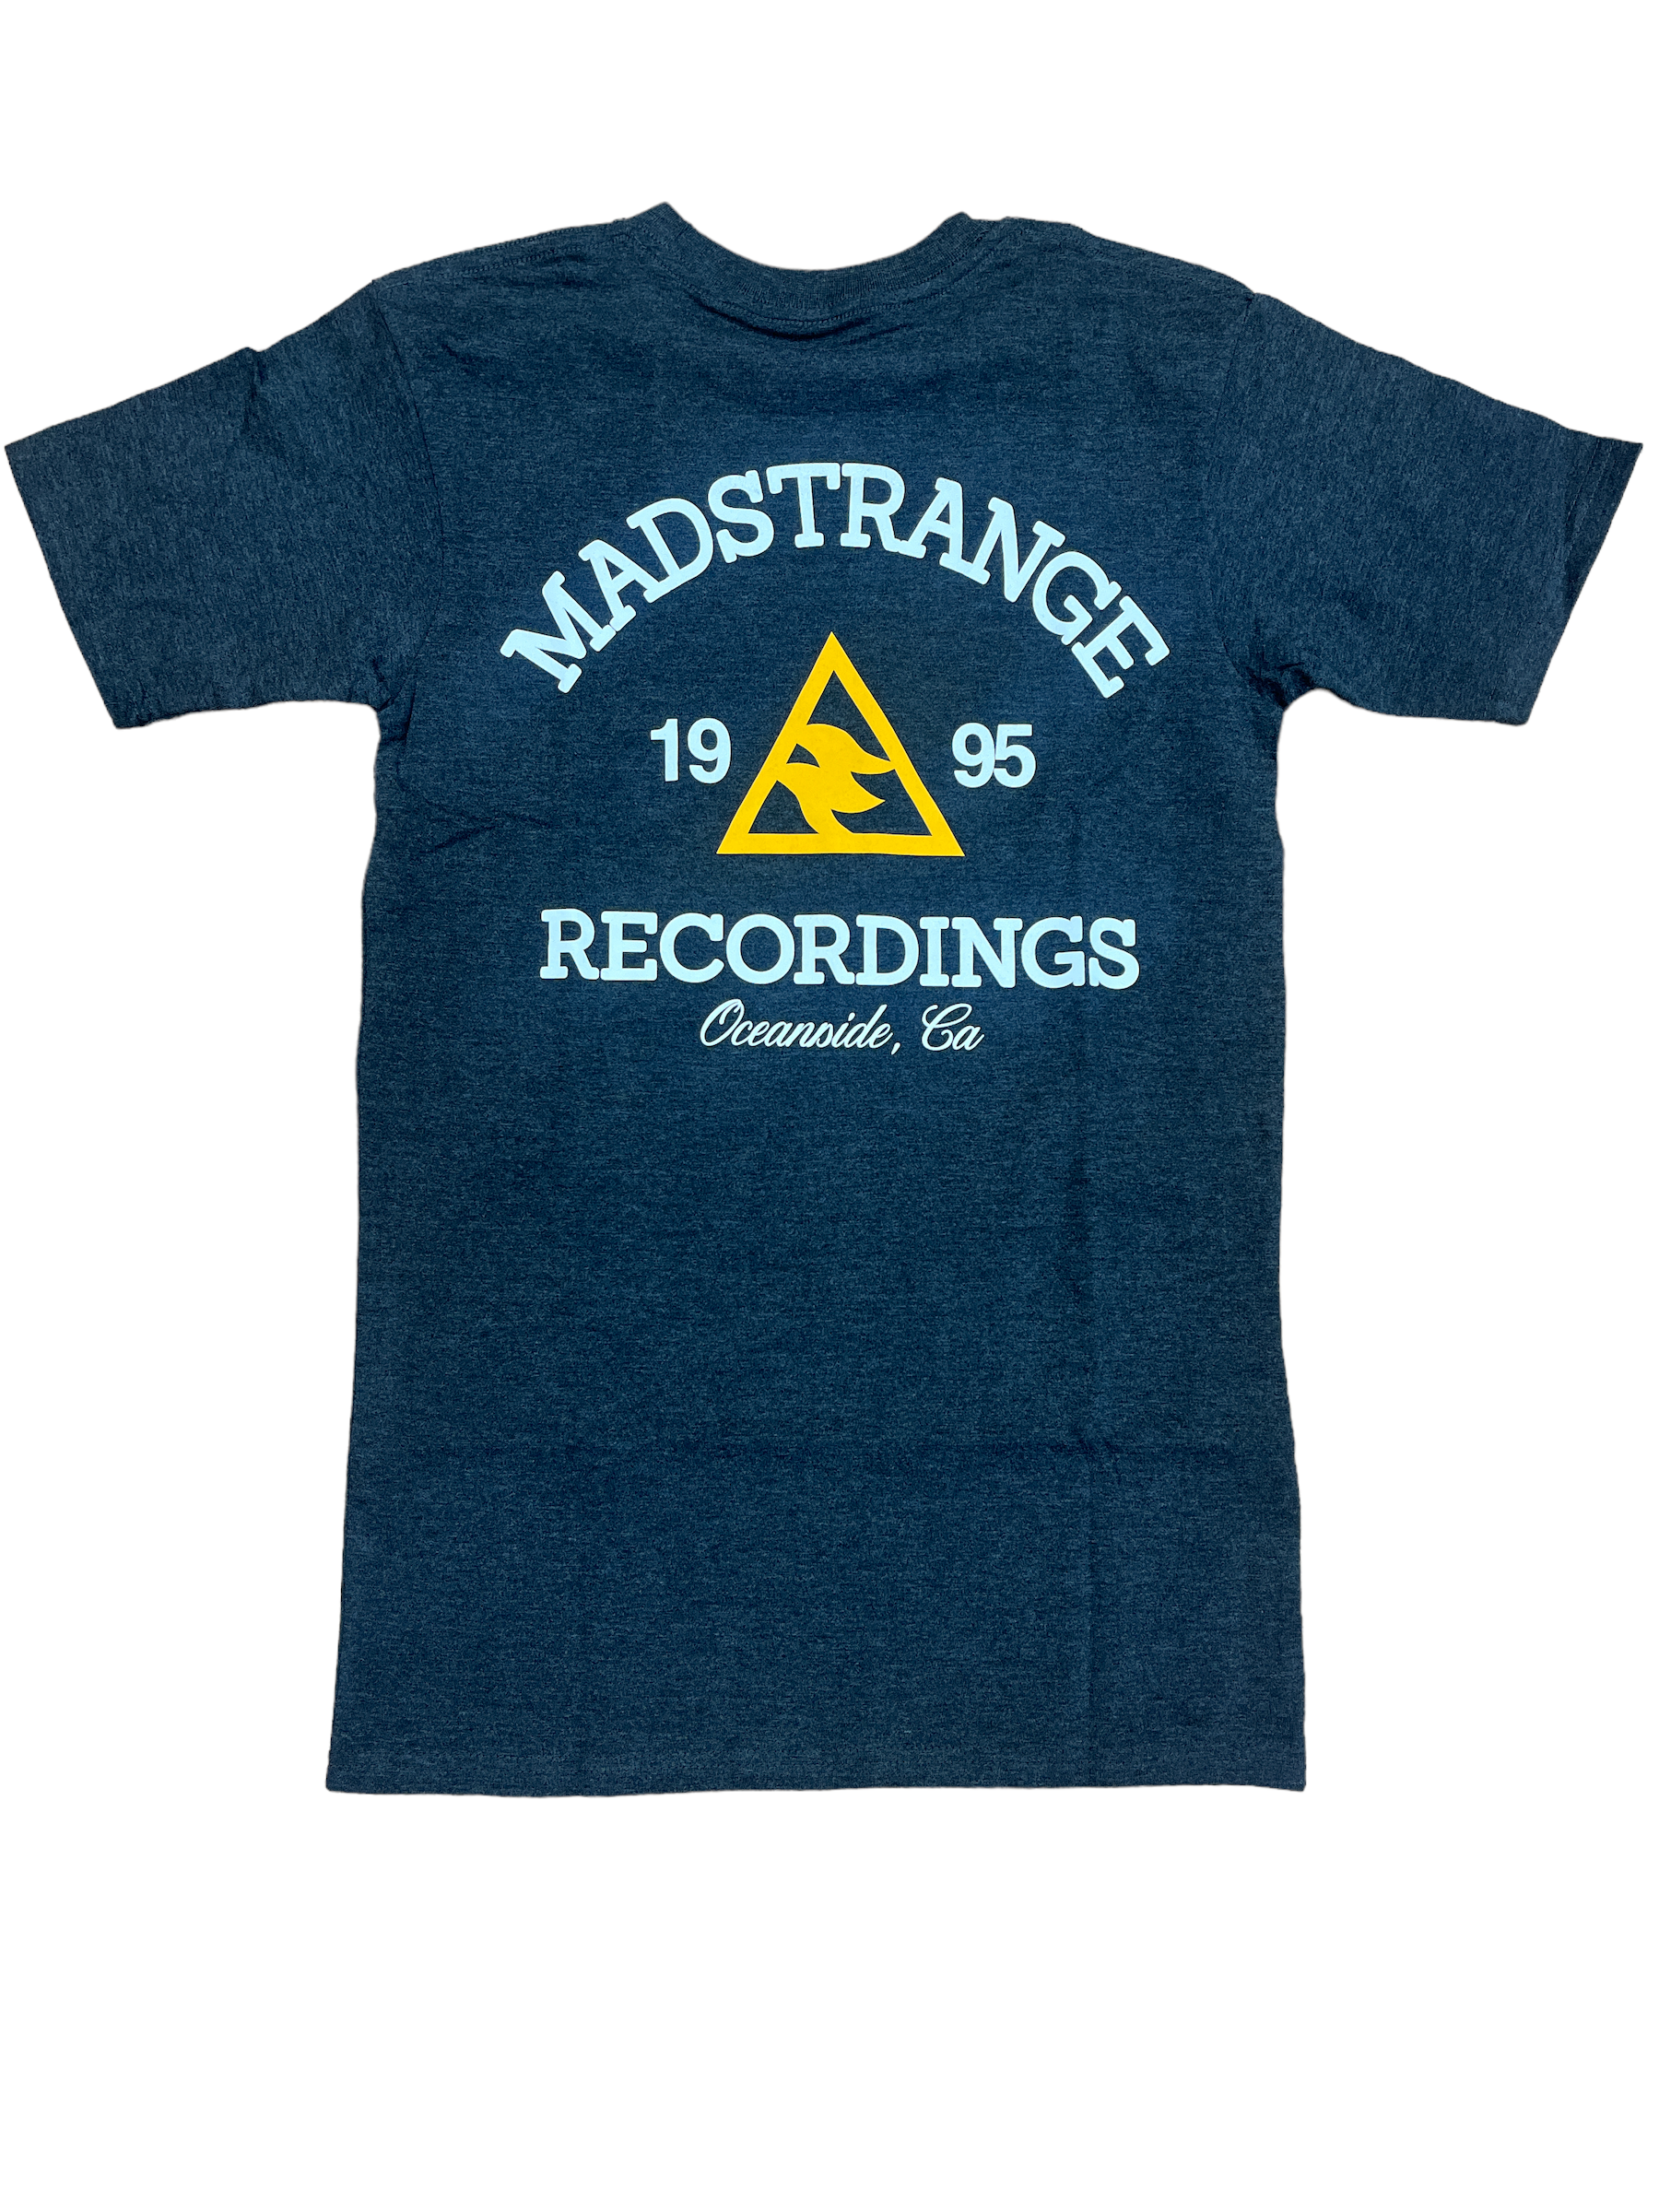 MadStrange Recordings (Charcoal)